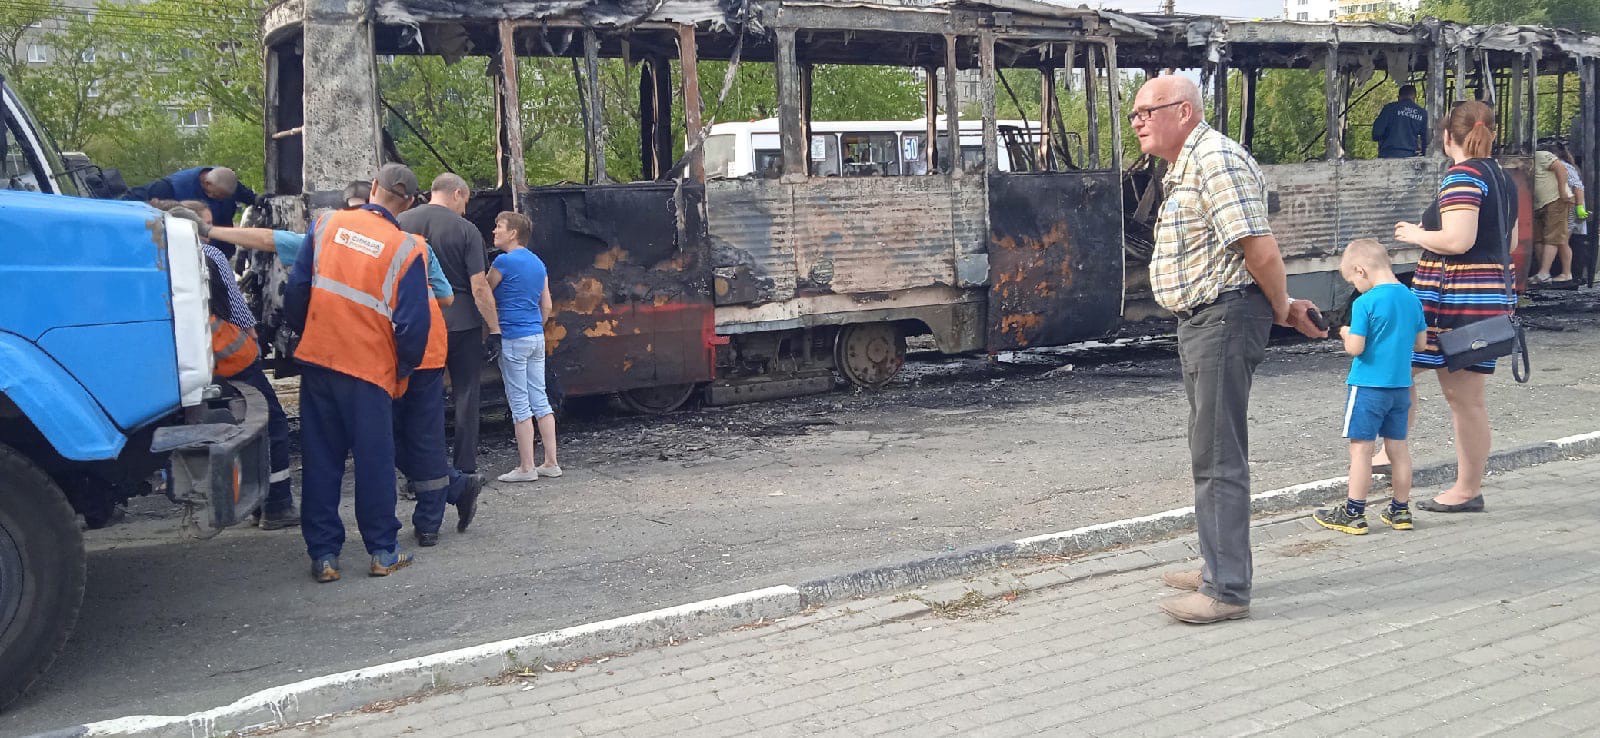 Трамвай Нижний Тагил сгорел. Нижний Тагил трамвай ГАЗ пожар. Загорелся трамвай в Нижнем Новгороде сегодня. Трамвай внежнем Тагиле затопило Вад. Сгорел слава